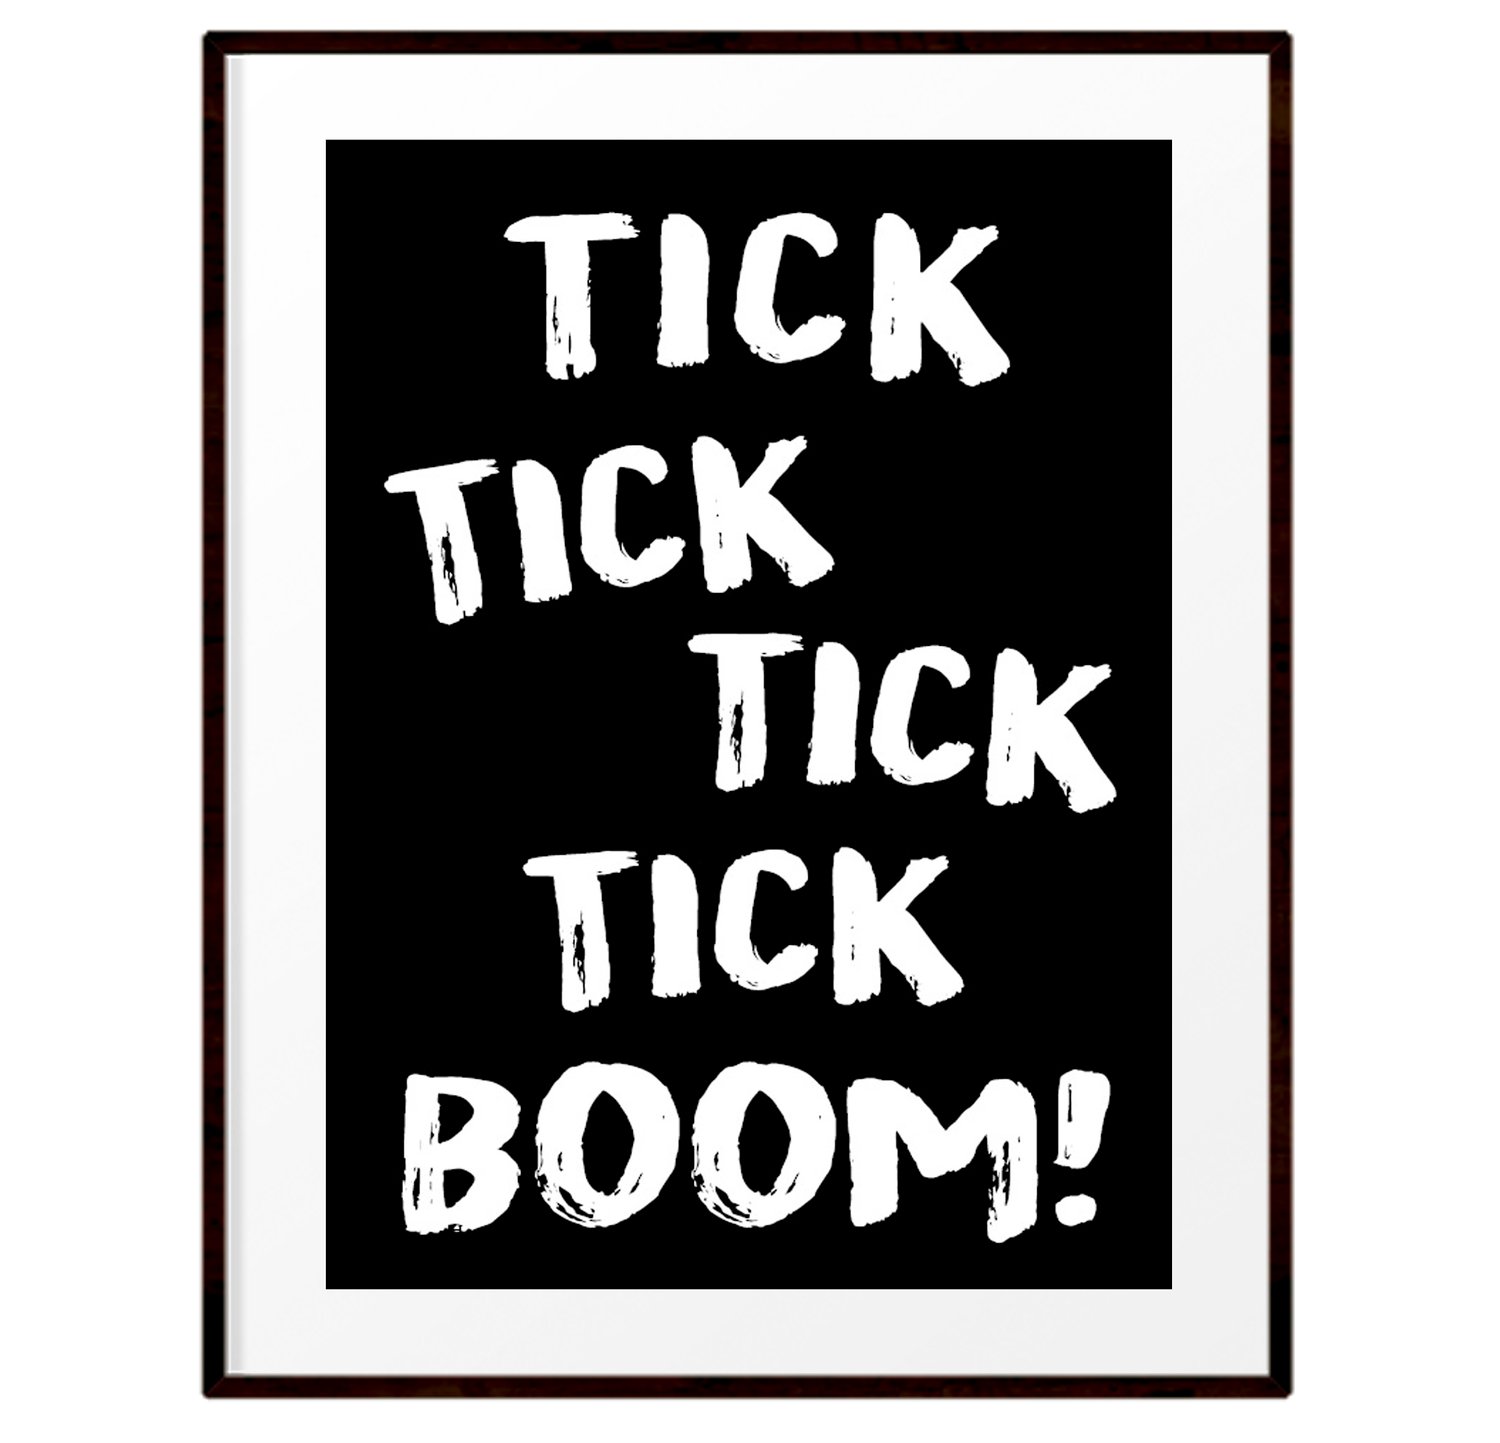 Image of Tick tick boom!